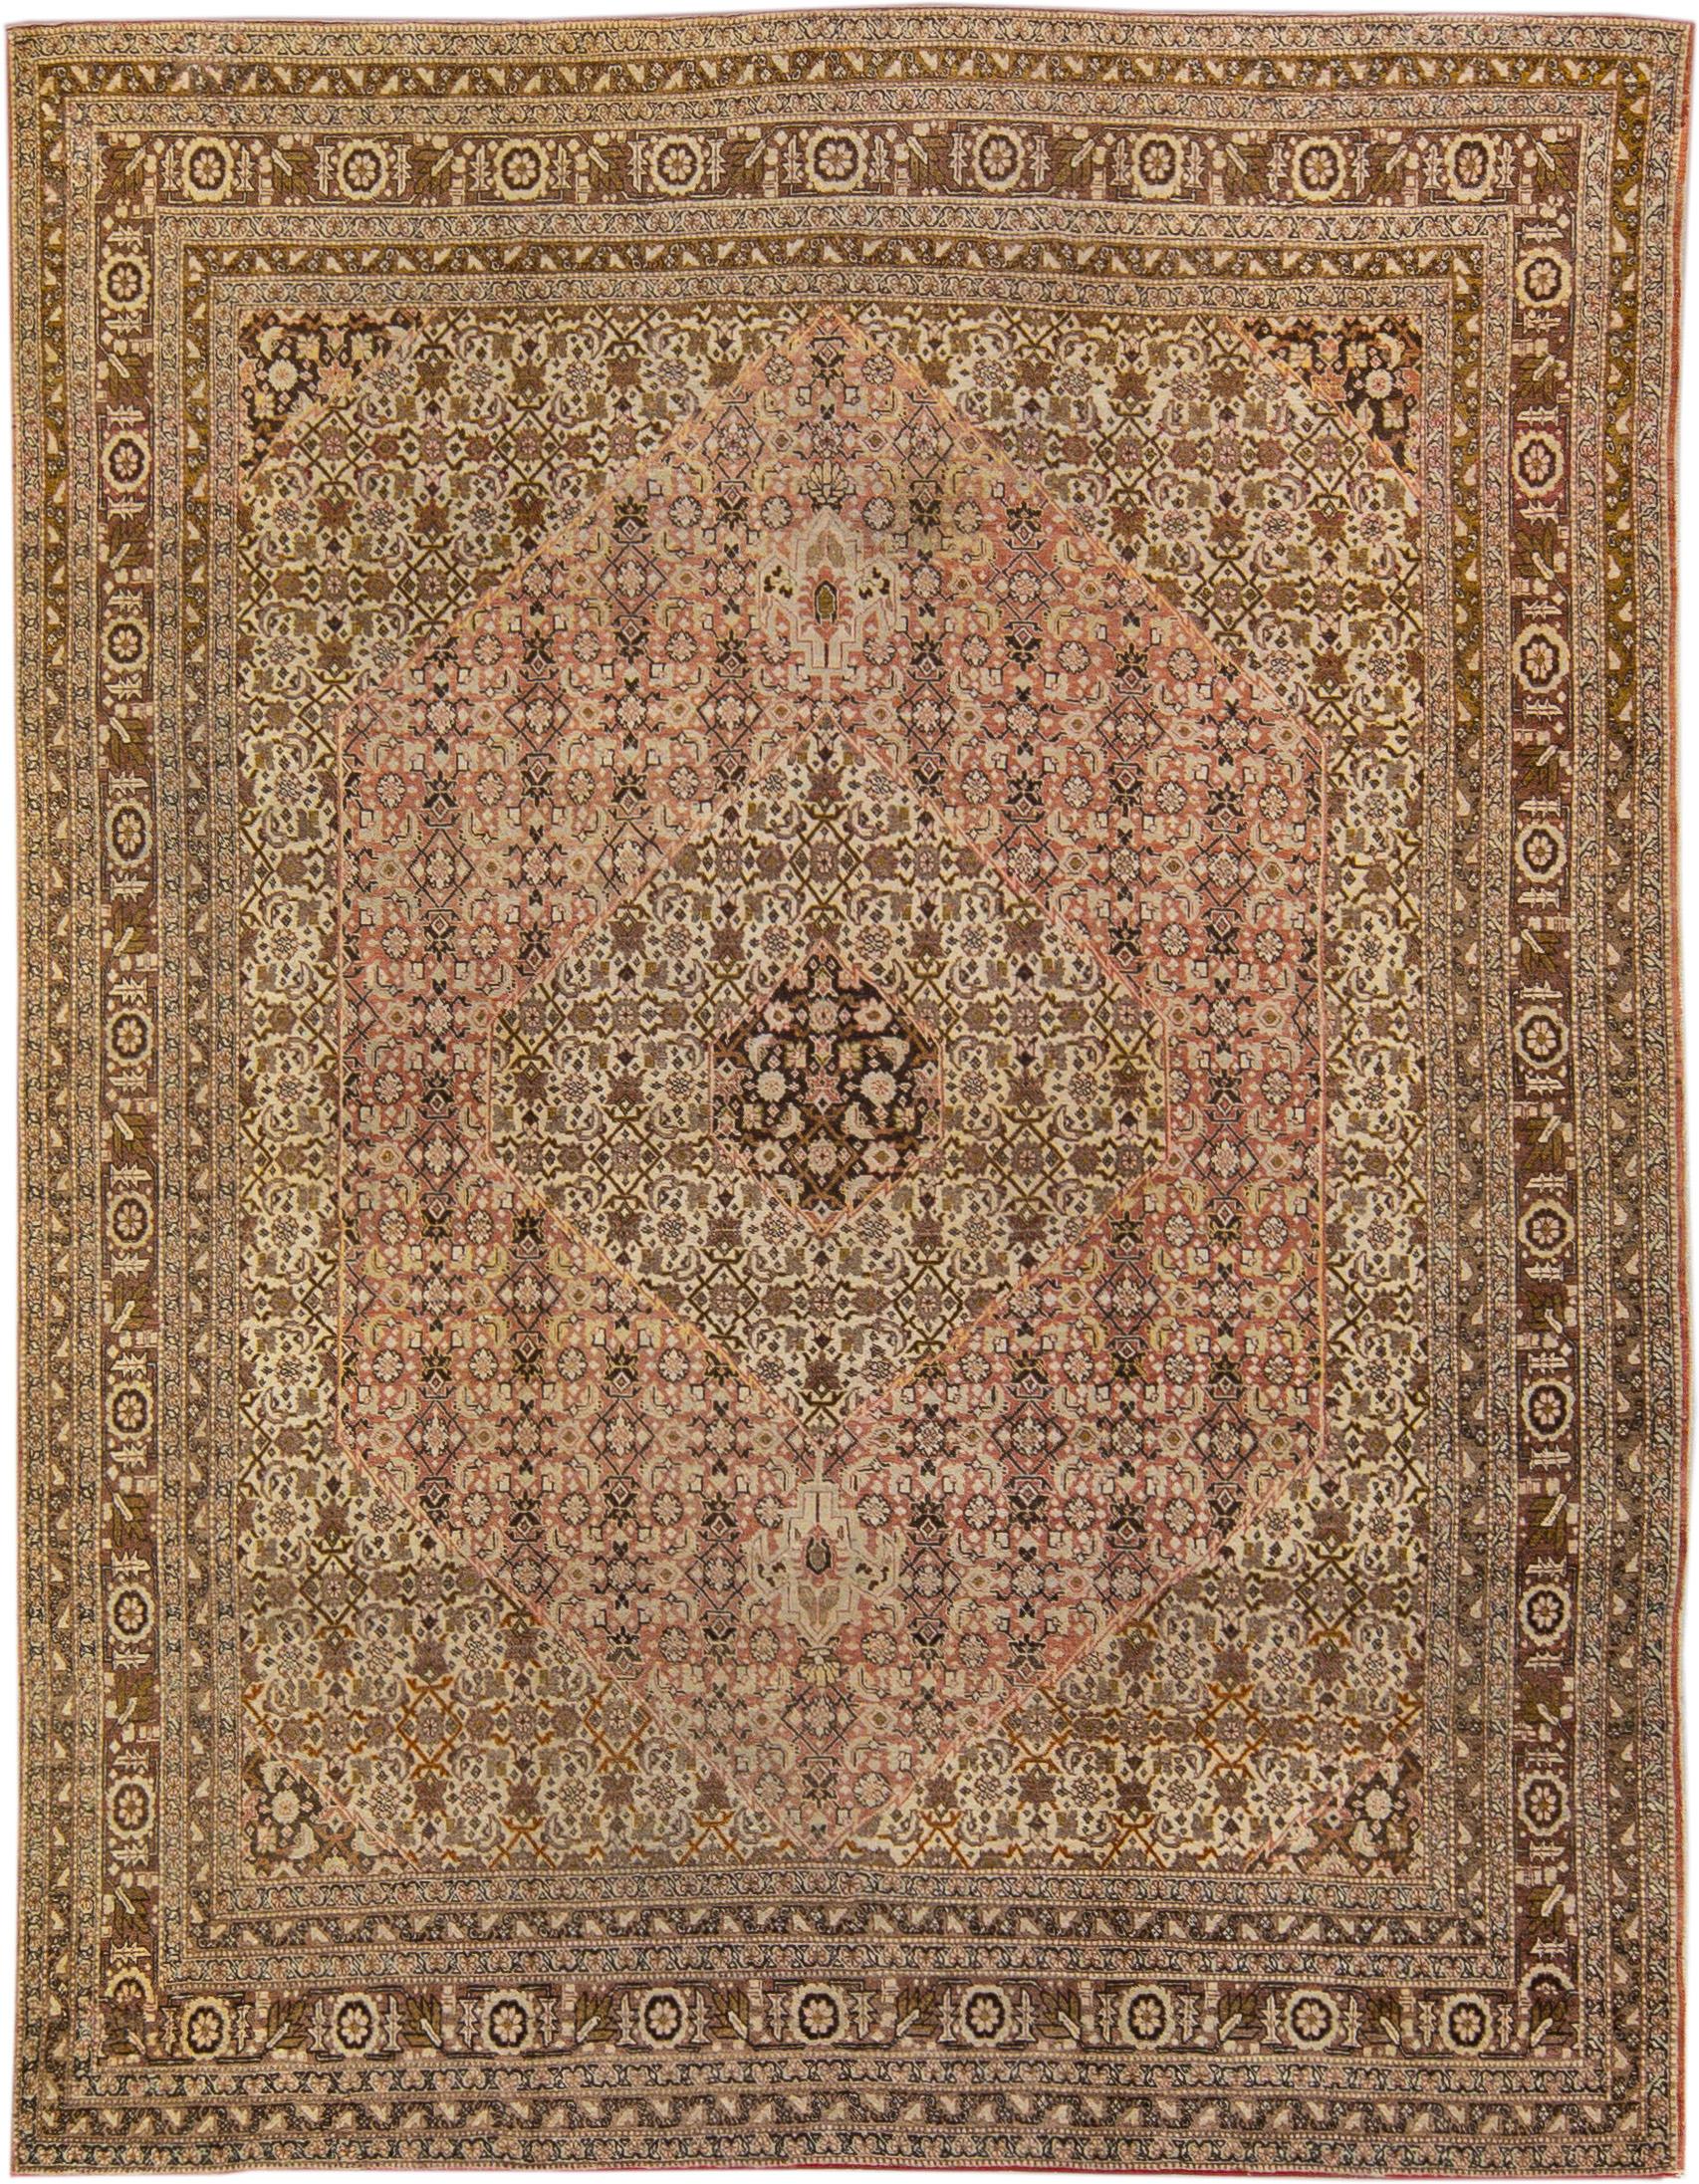 Antique Tabriz Beige and Brown Handmade All-over Designed Wool Rug For Sale